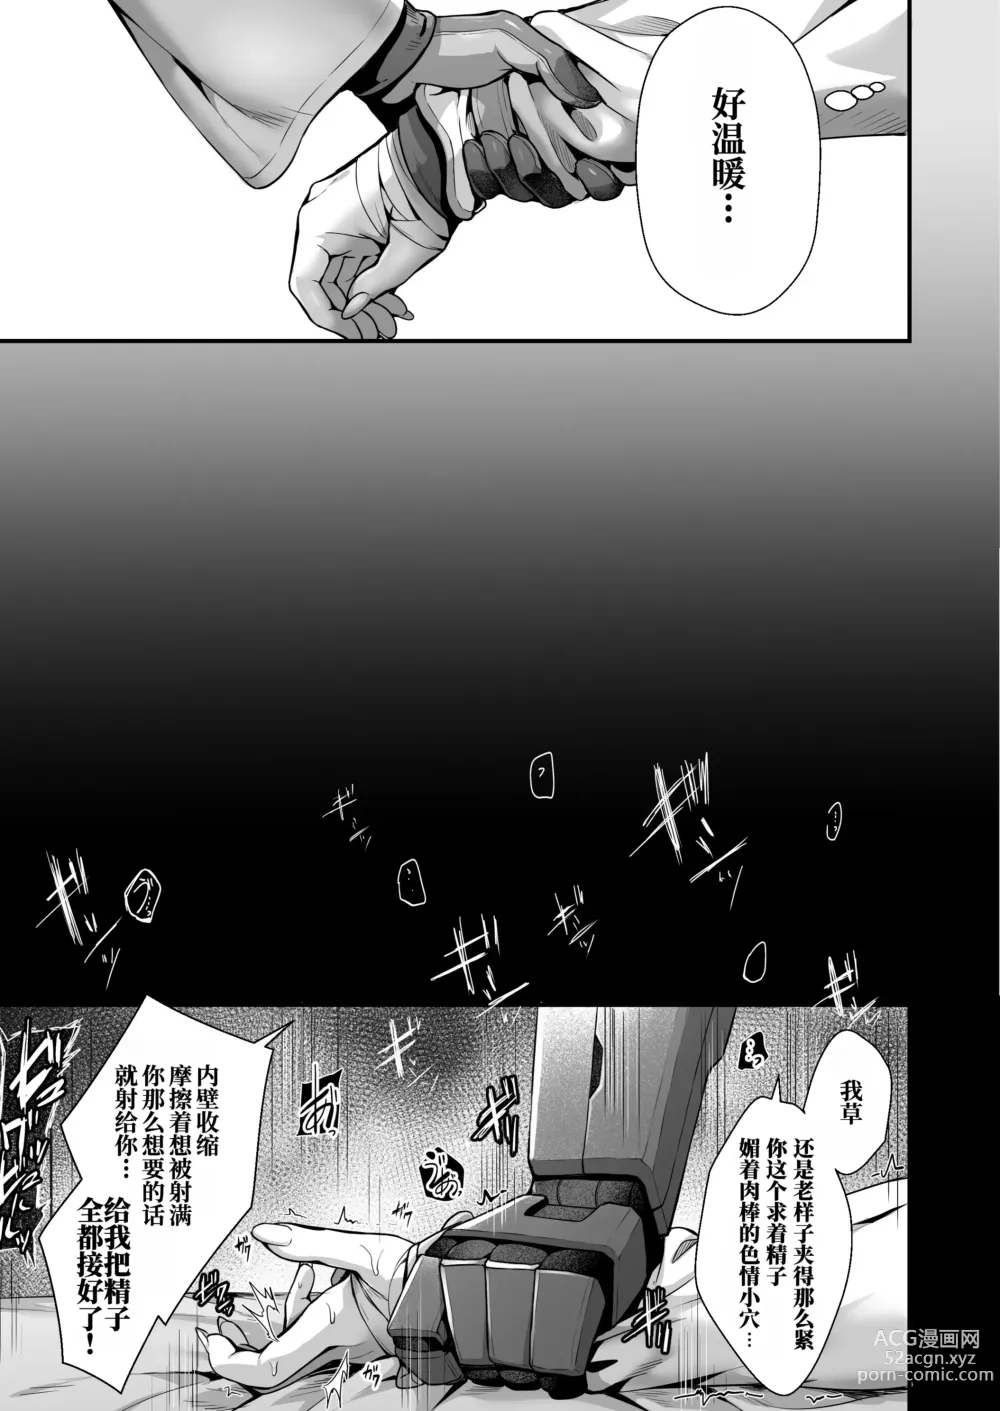 Page 9 of doujinshi 于泥泞的深渊入梦